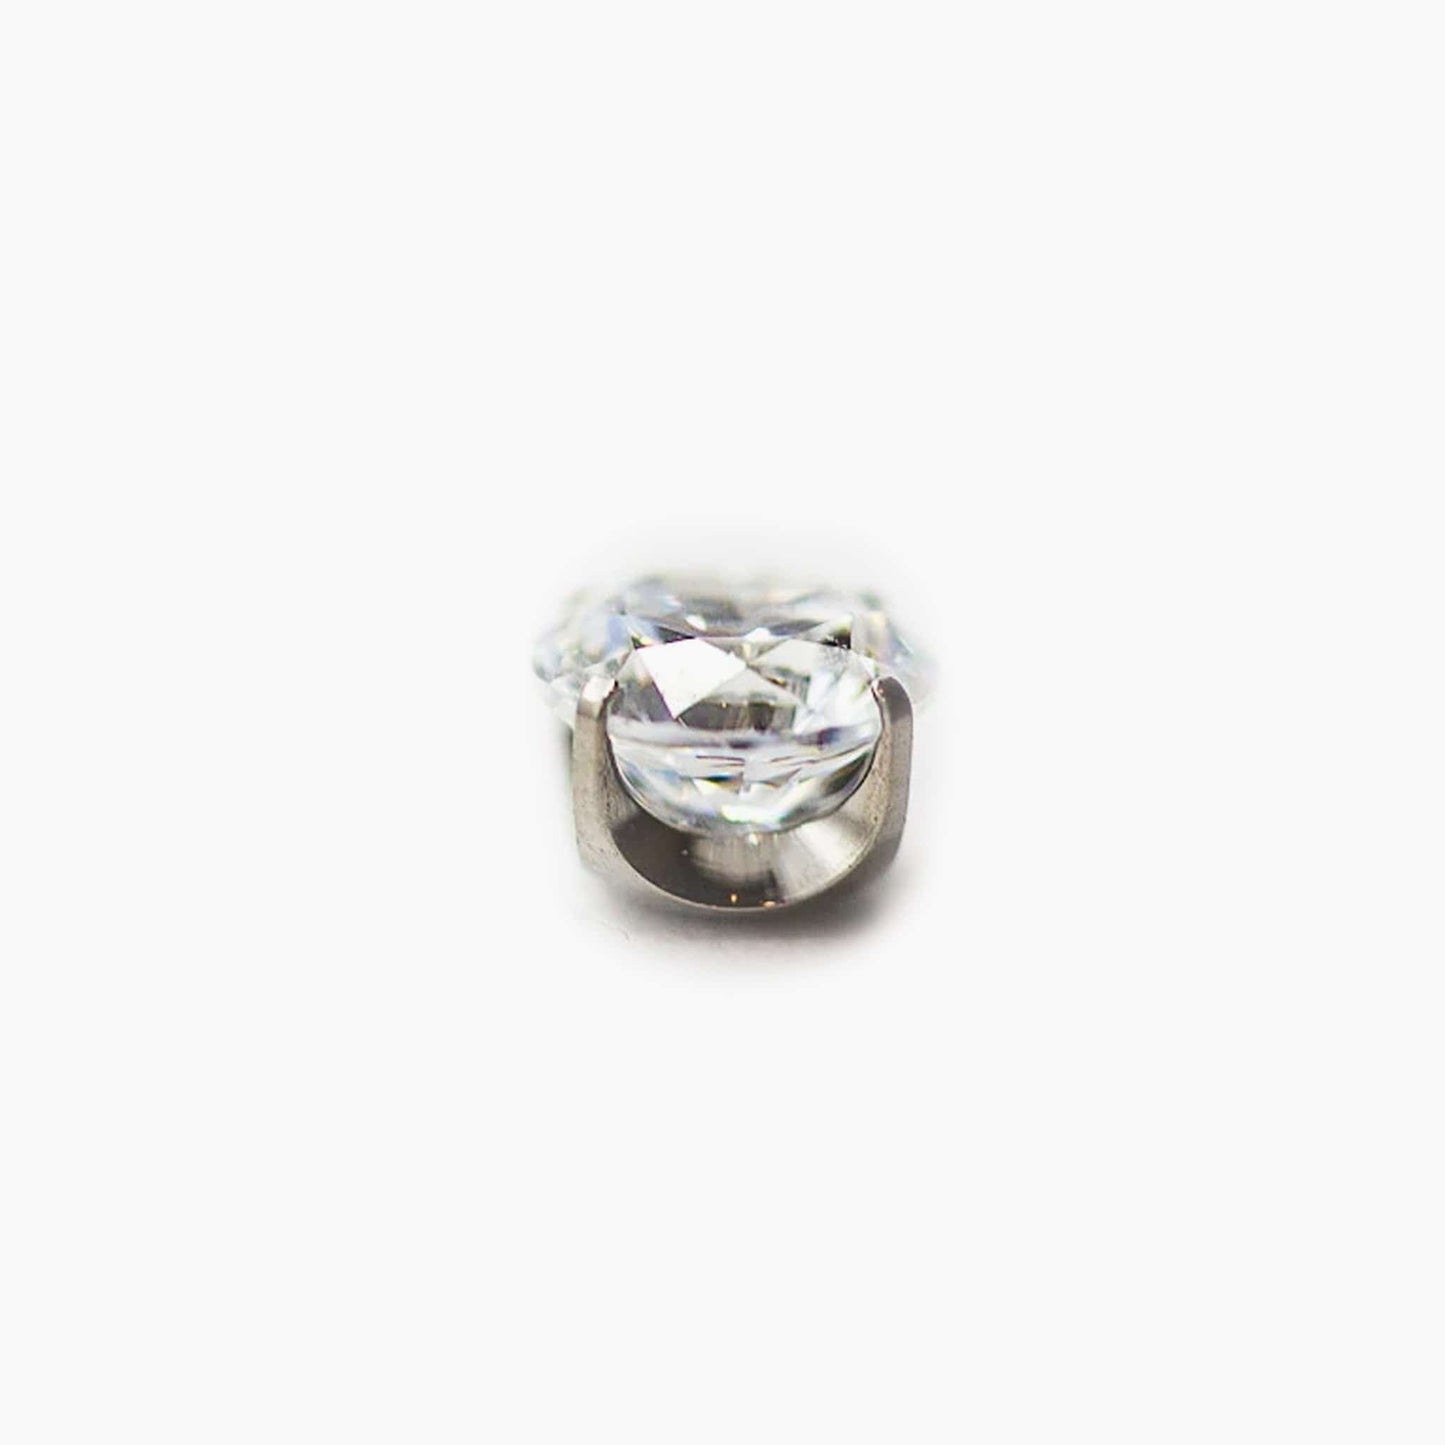 Prong Set Gem | Titanium Threadless Top For Nose, Ears & Lip - Avanti Body Jewelry